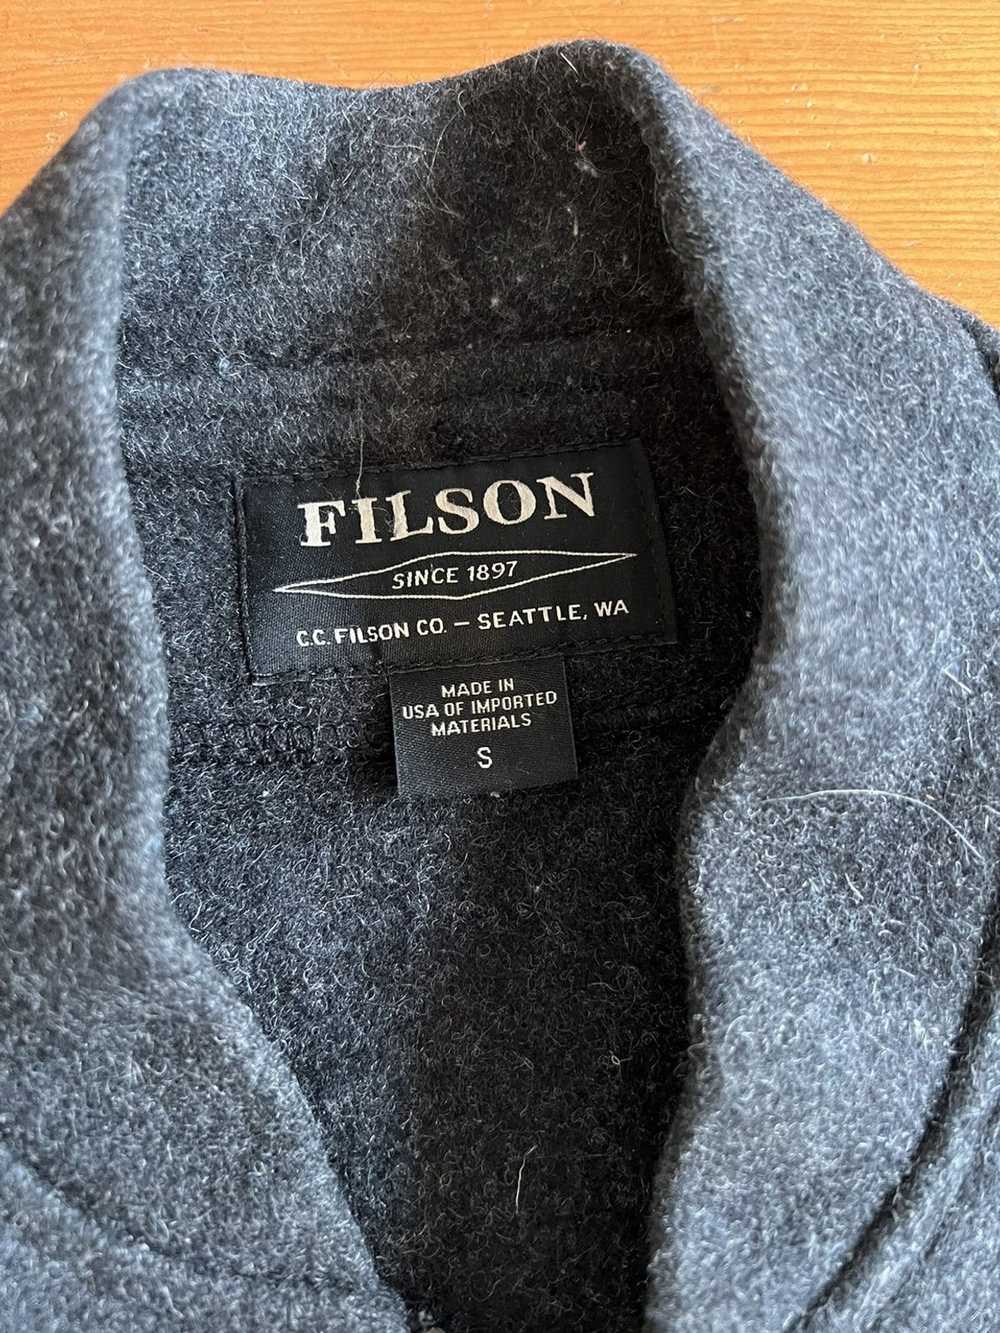 Filson Filson wool vest liner - image 2